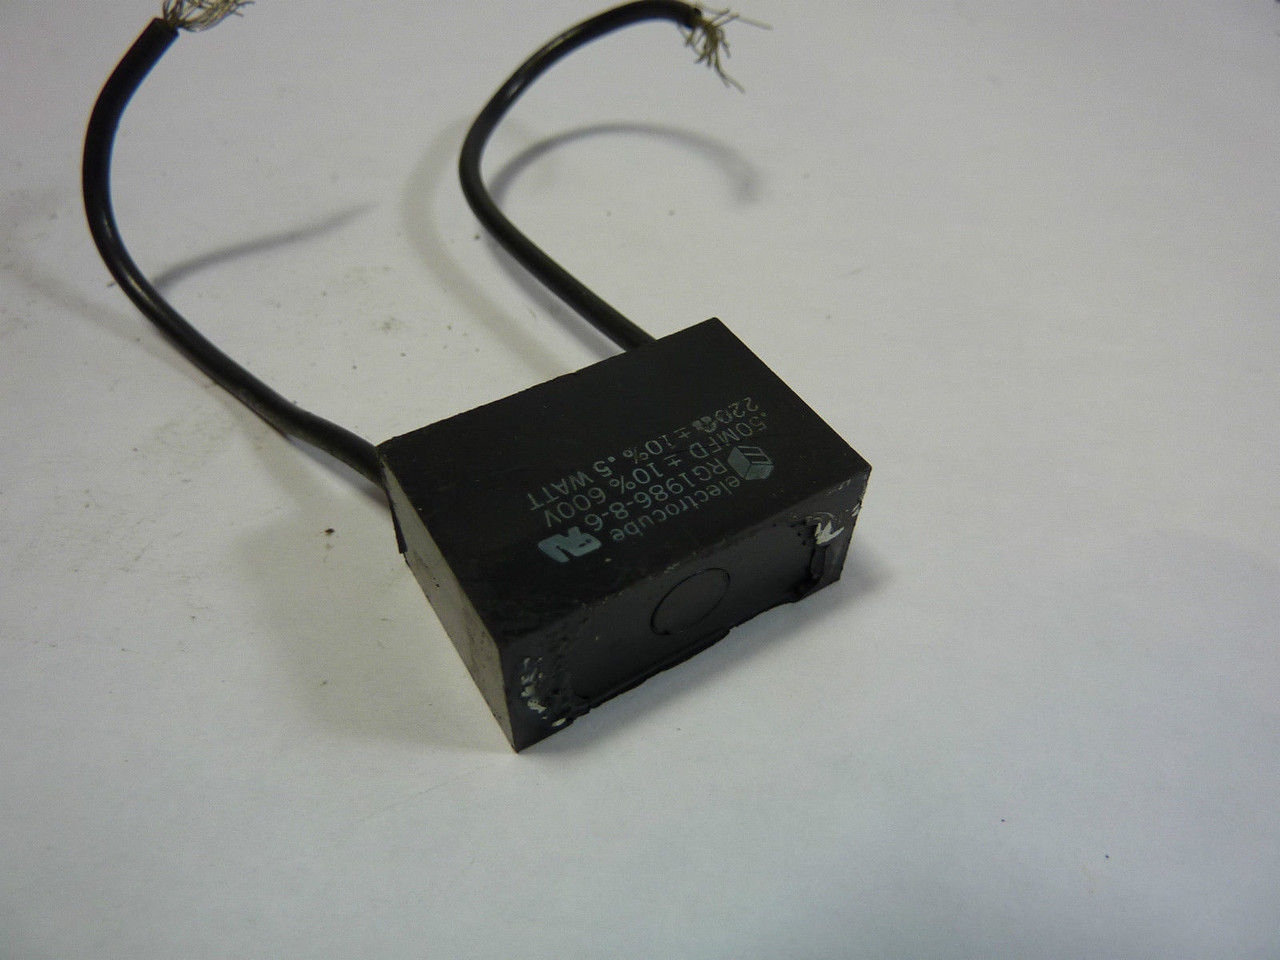 Electrocube RG1986-8-6 RC Network 1/2W 600V USED